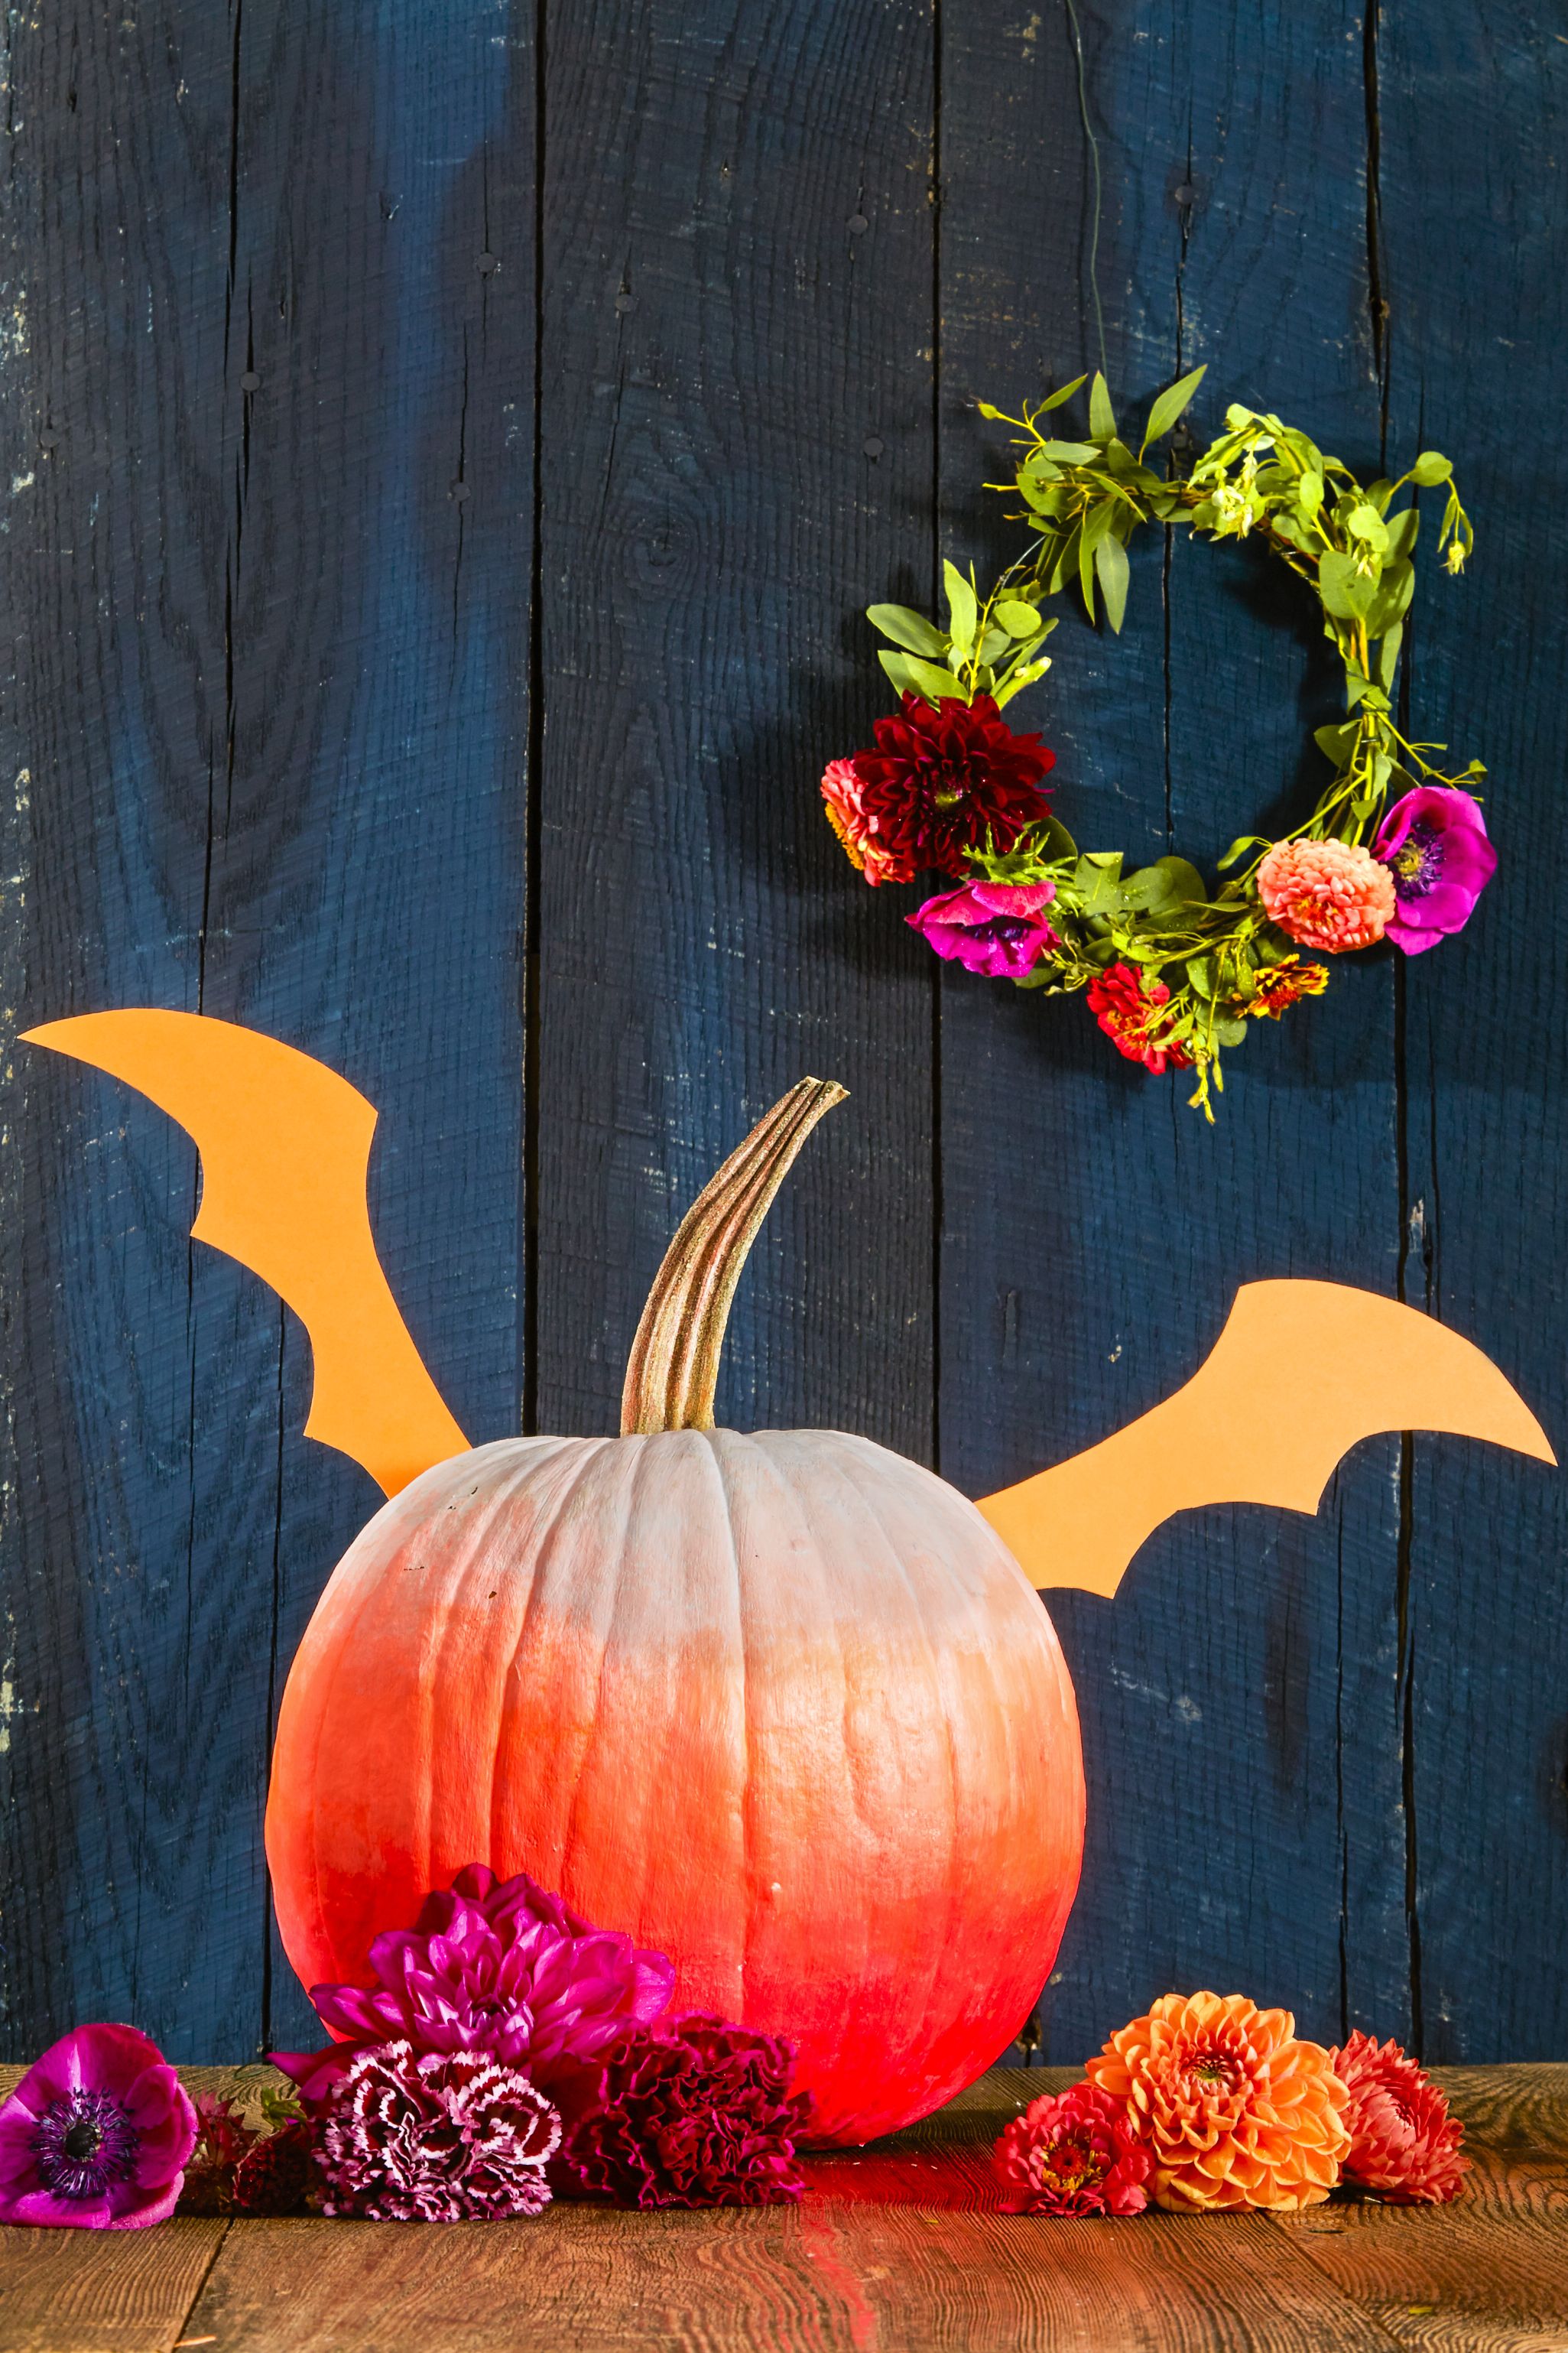 12 Easy No-Carve Pumpkin Decorating Ideas - Cute Pumpkin Decor Ideas